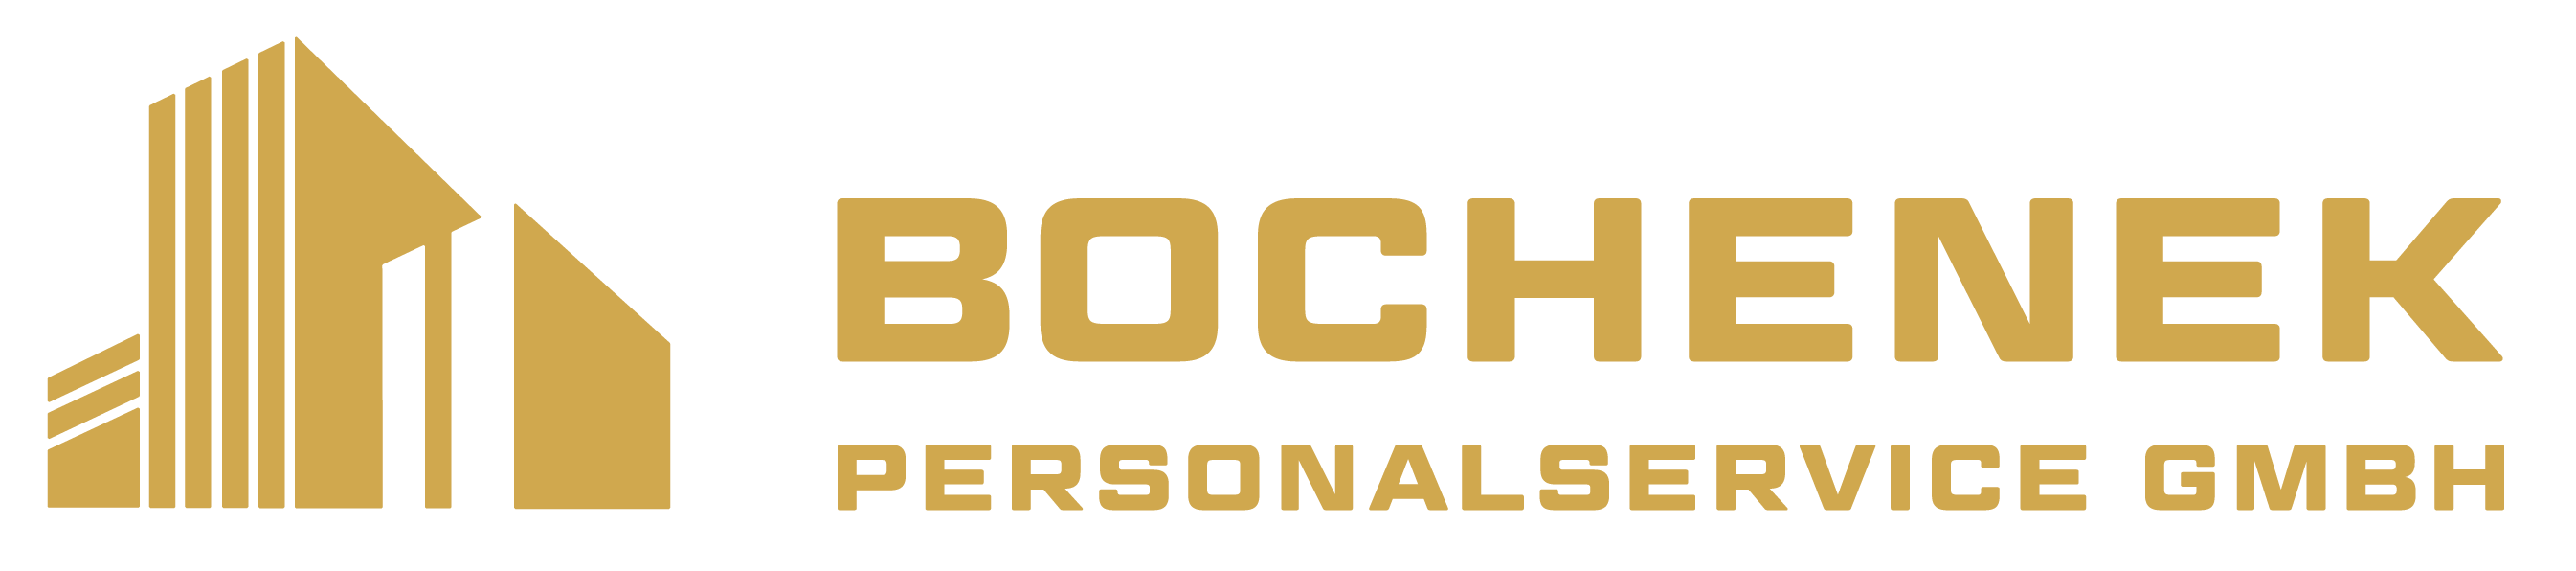 Bochenek Personalsevice GmbH logo